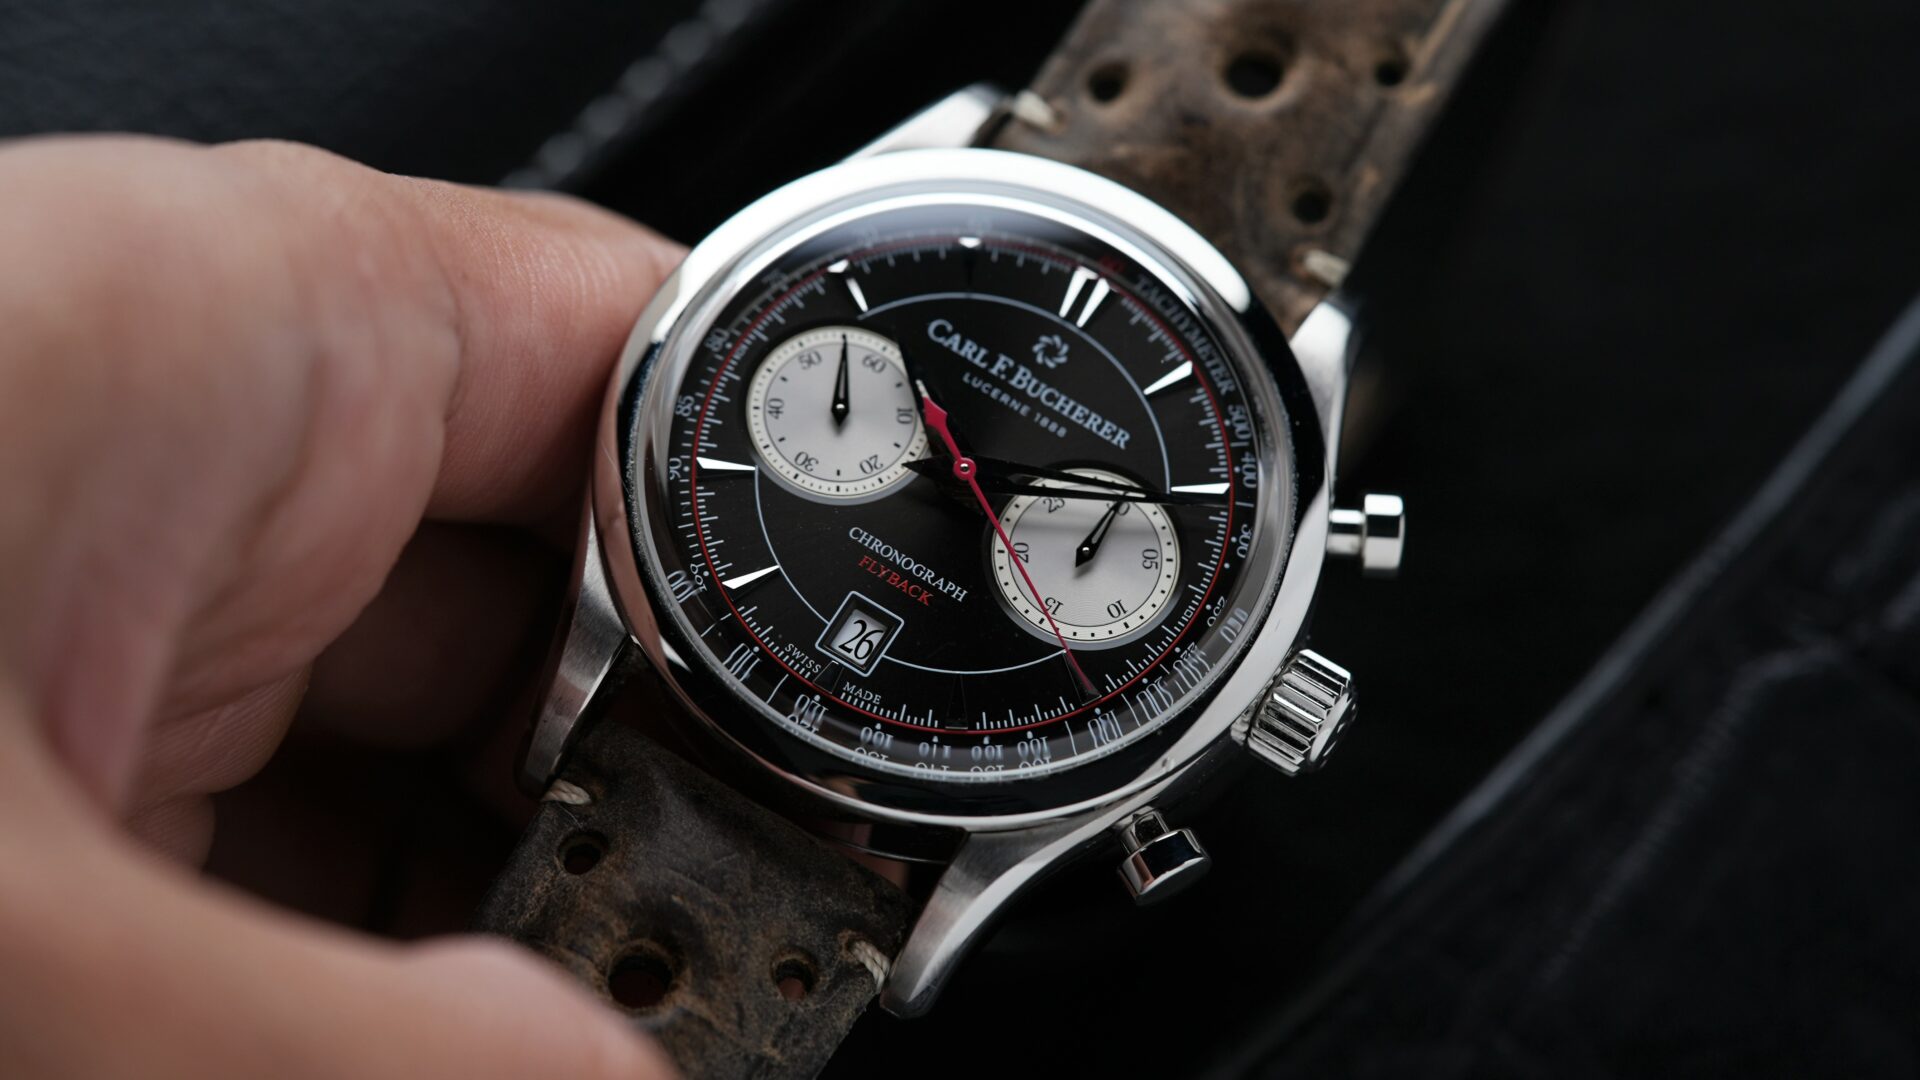 Carl F. Bucherer Manero Flyback Chronograph 00.10919.08.33.02 watch held in hand.